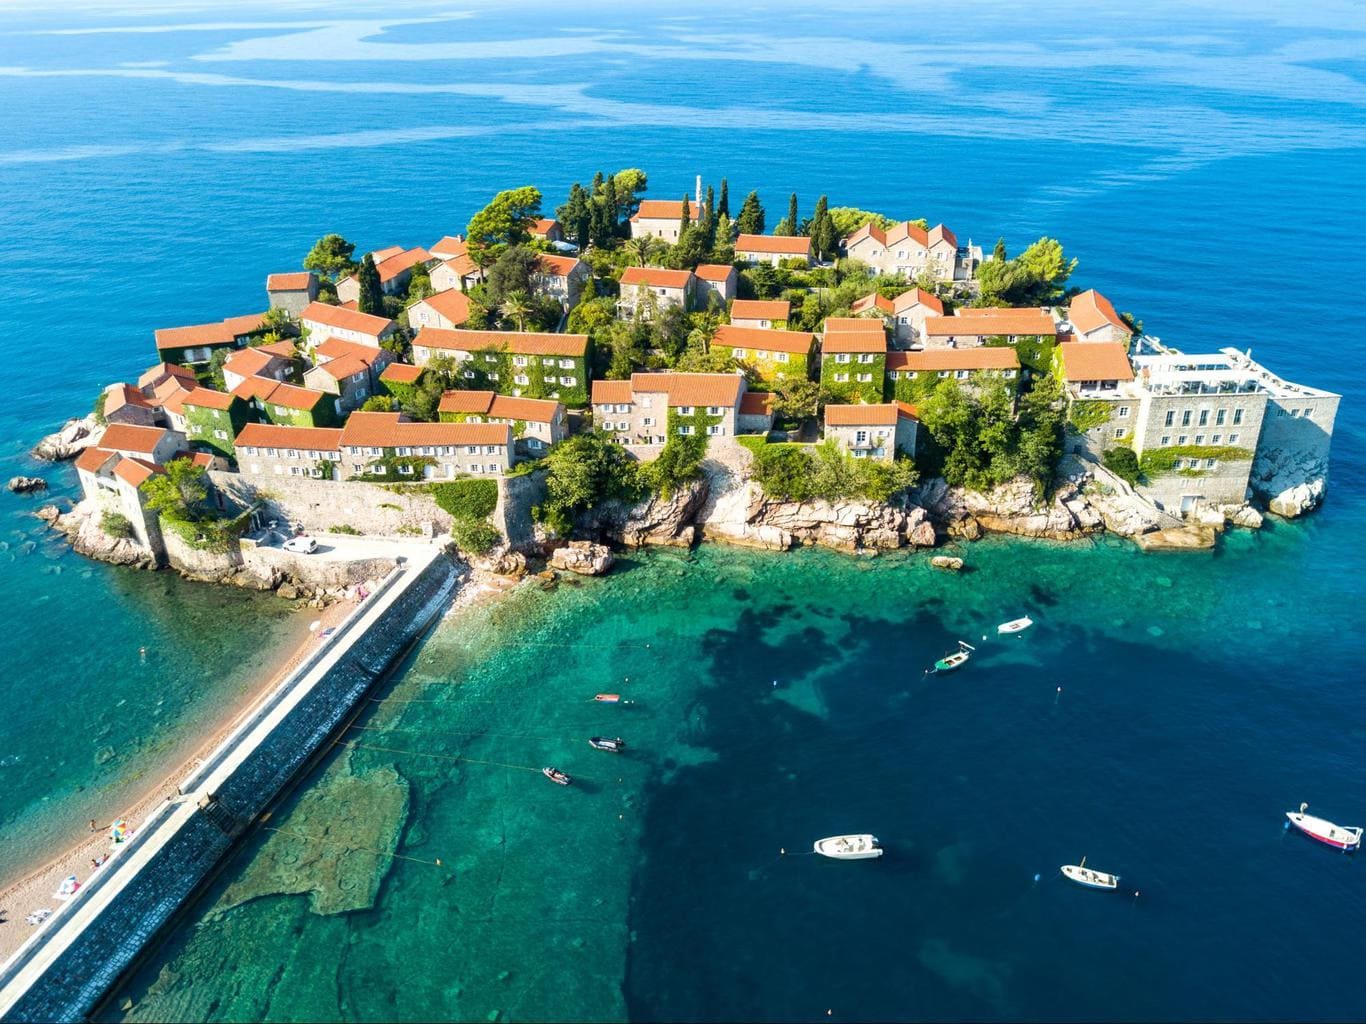 Montenegro’s most famous landmark